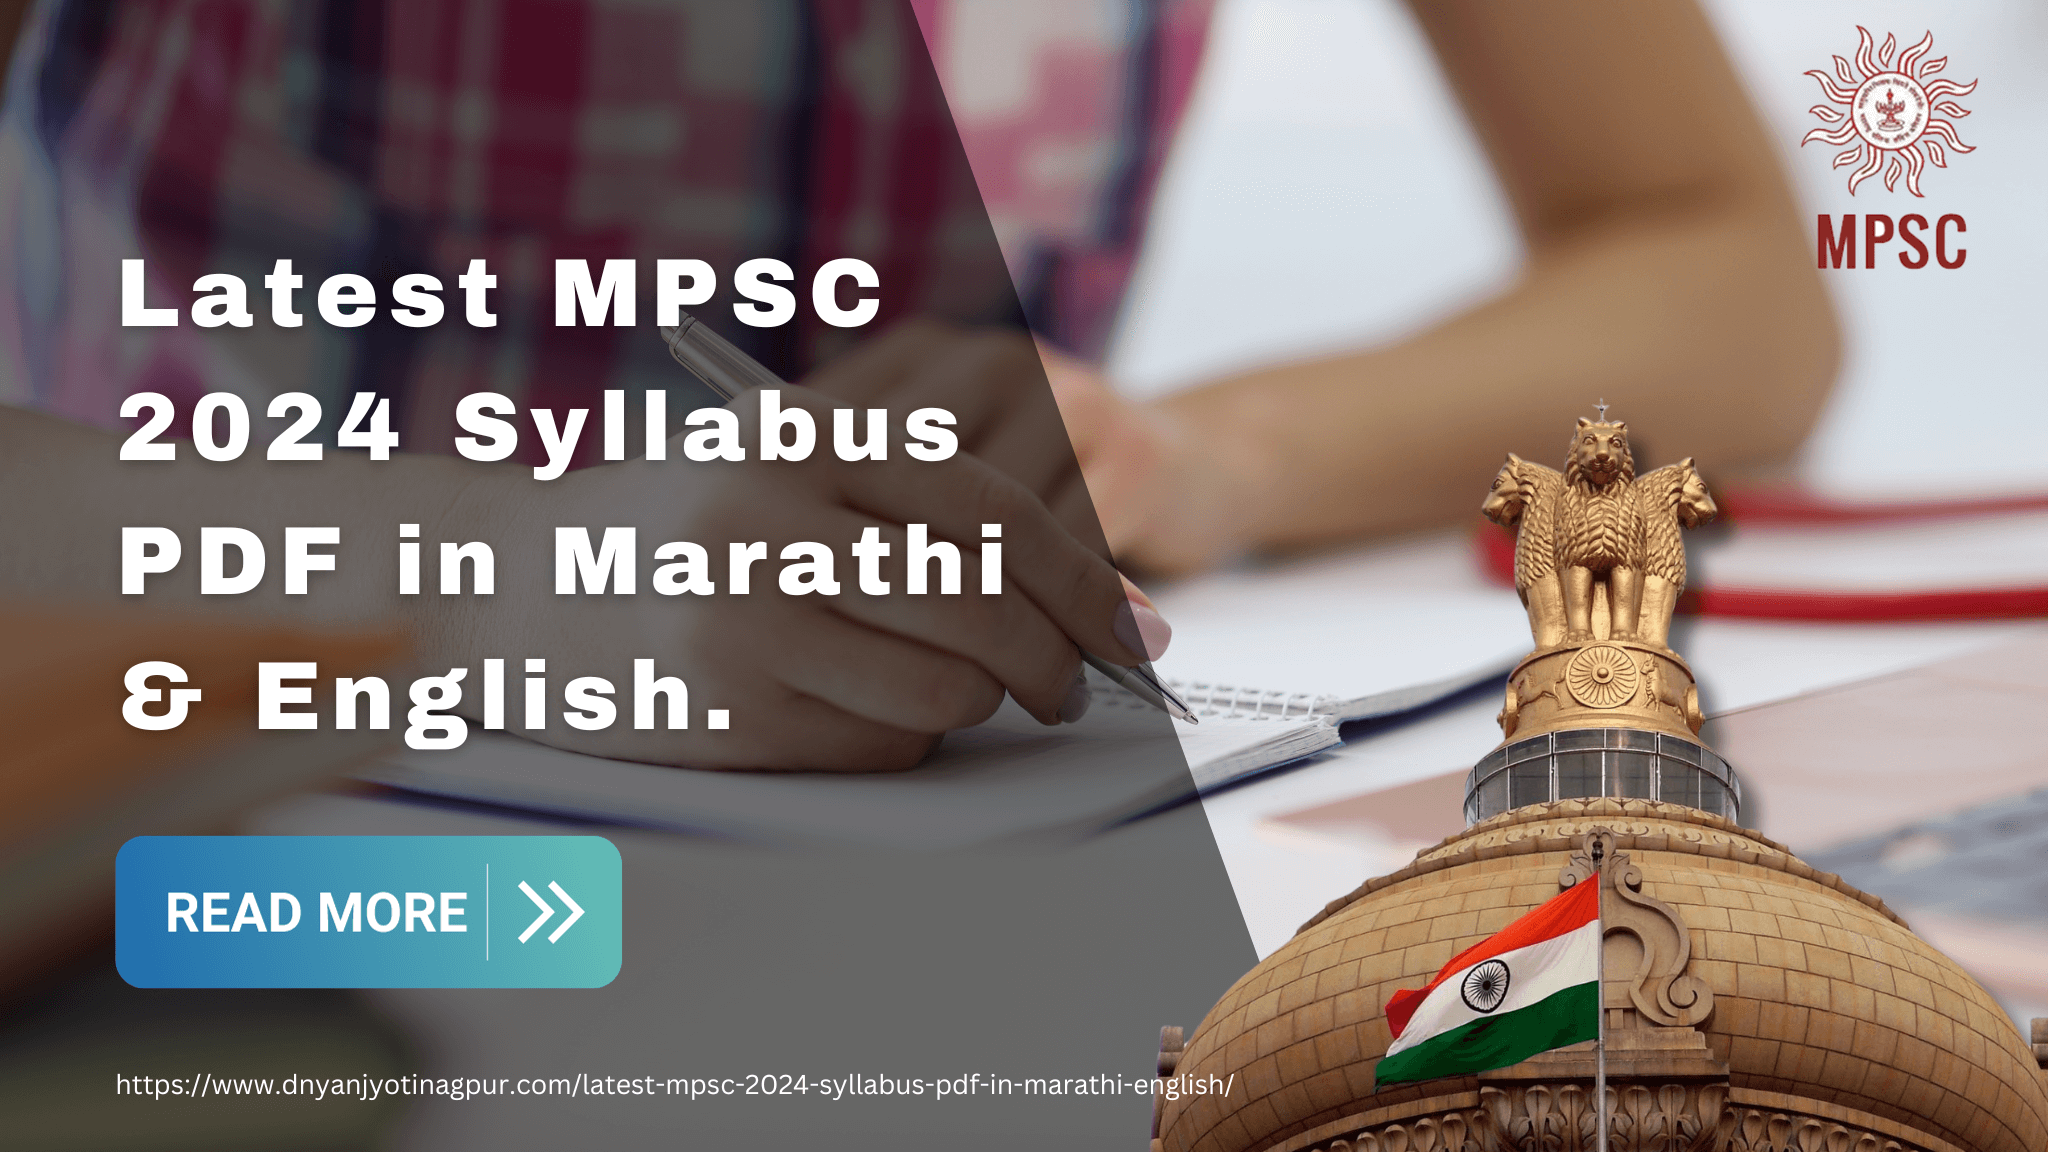 Latest MPSC 2024 Syllabus PDF in Marathi & English.